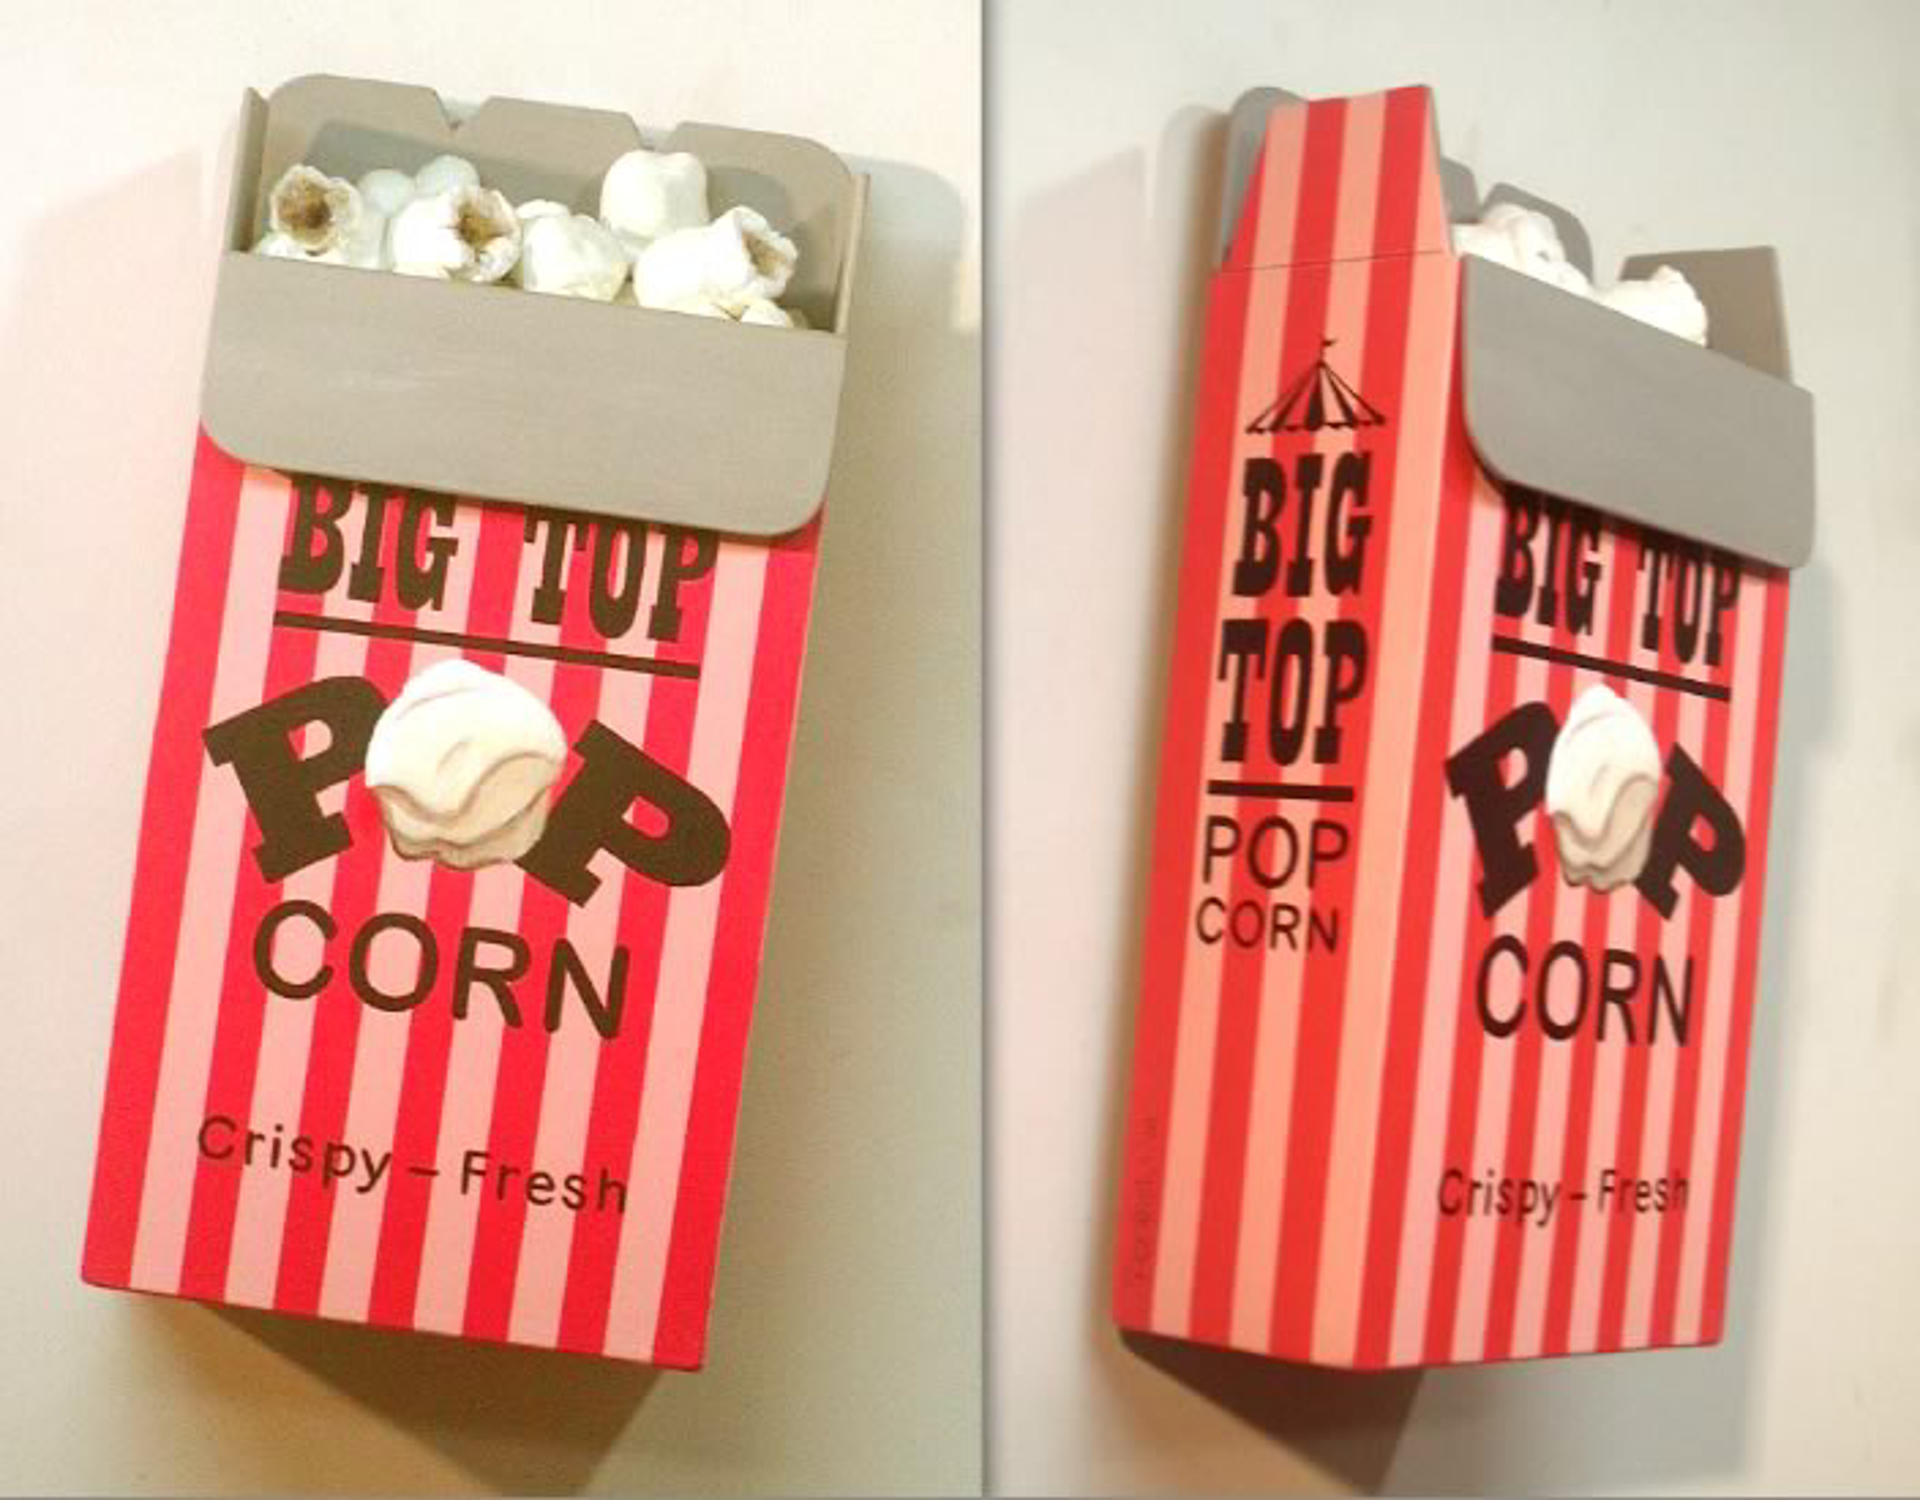 Big Top Pop (Popcorn) by Rick Biehl